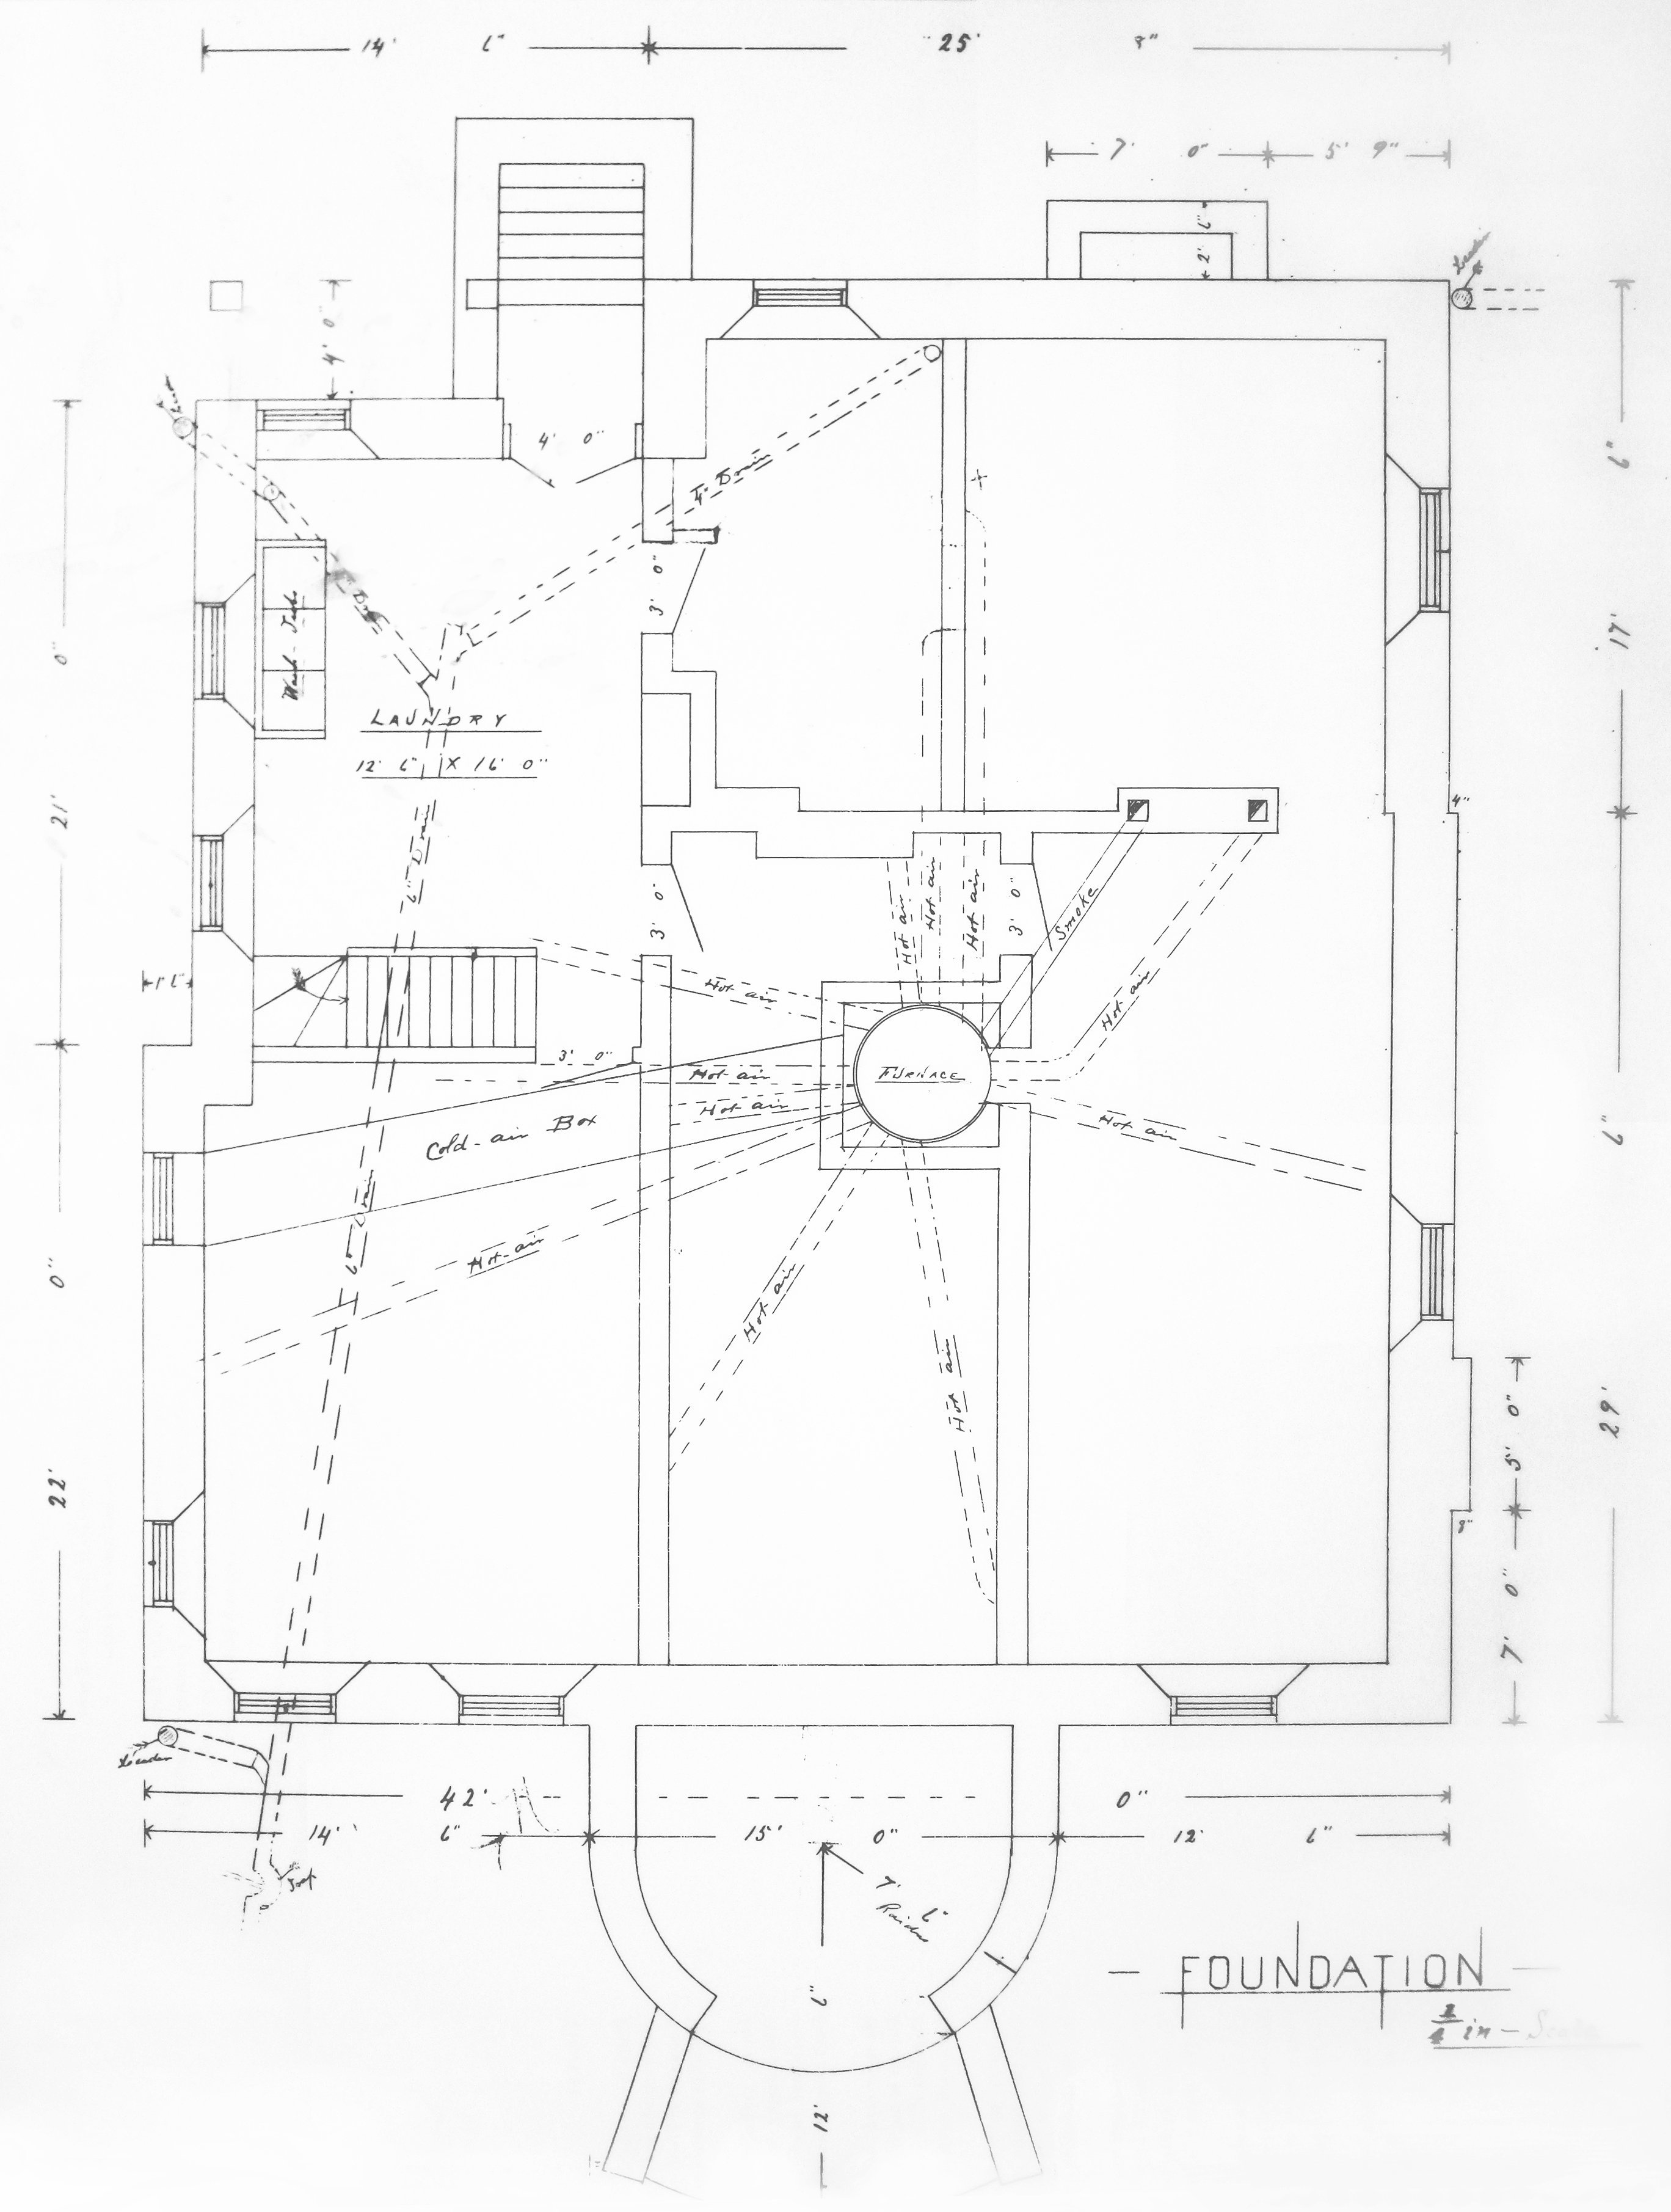 Blueprint of the Hudson House Foundation